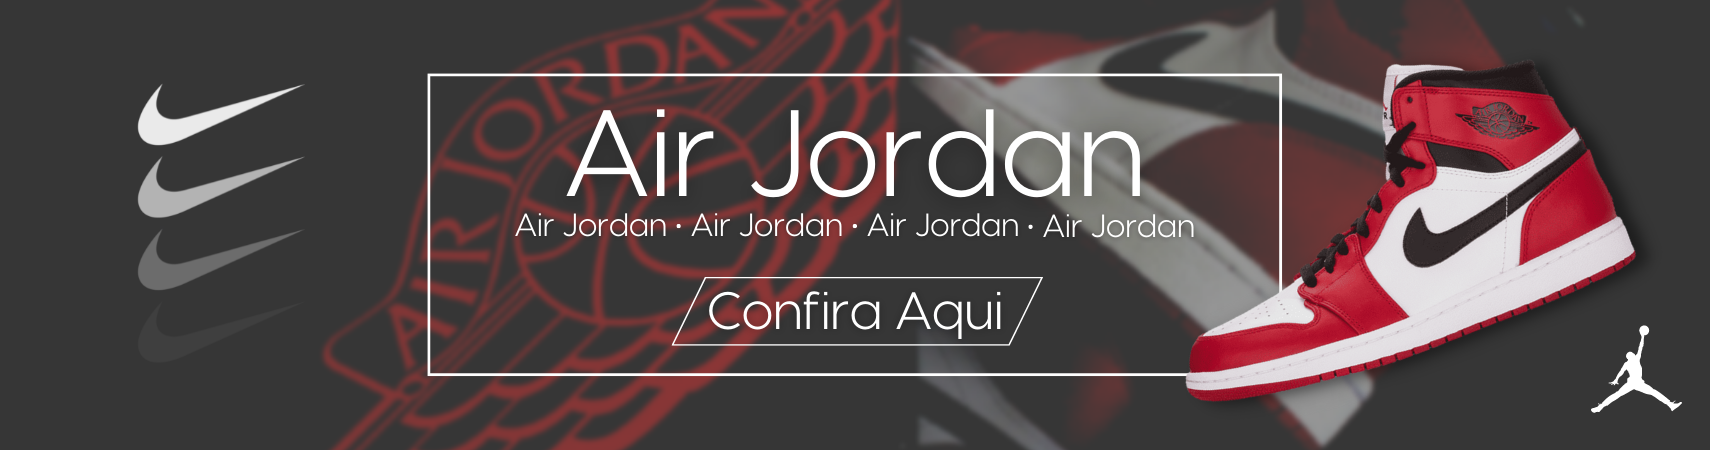 Criativamente - Air Jordan